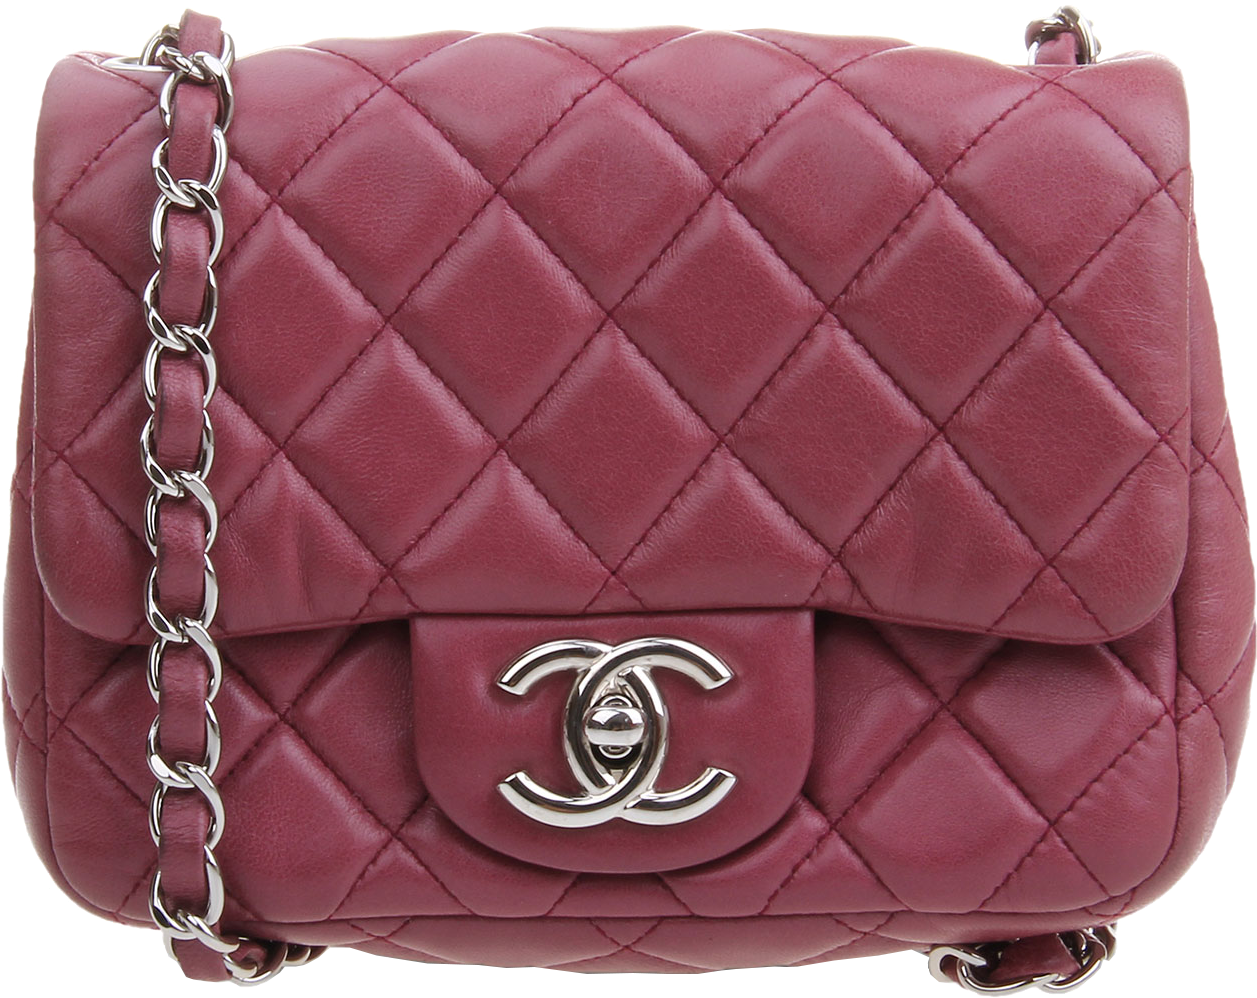 Pink Handbag Free Photo PNG Image